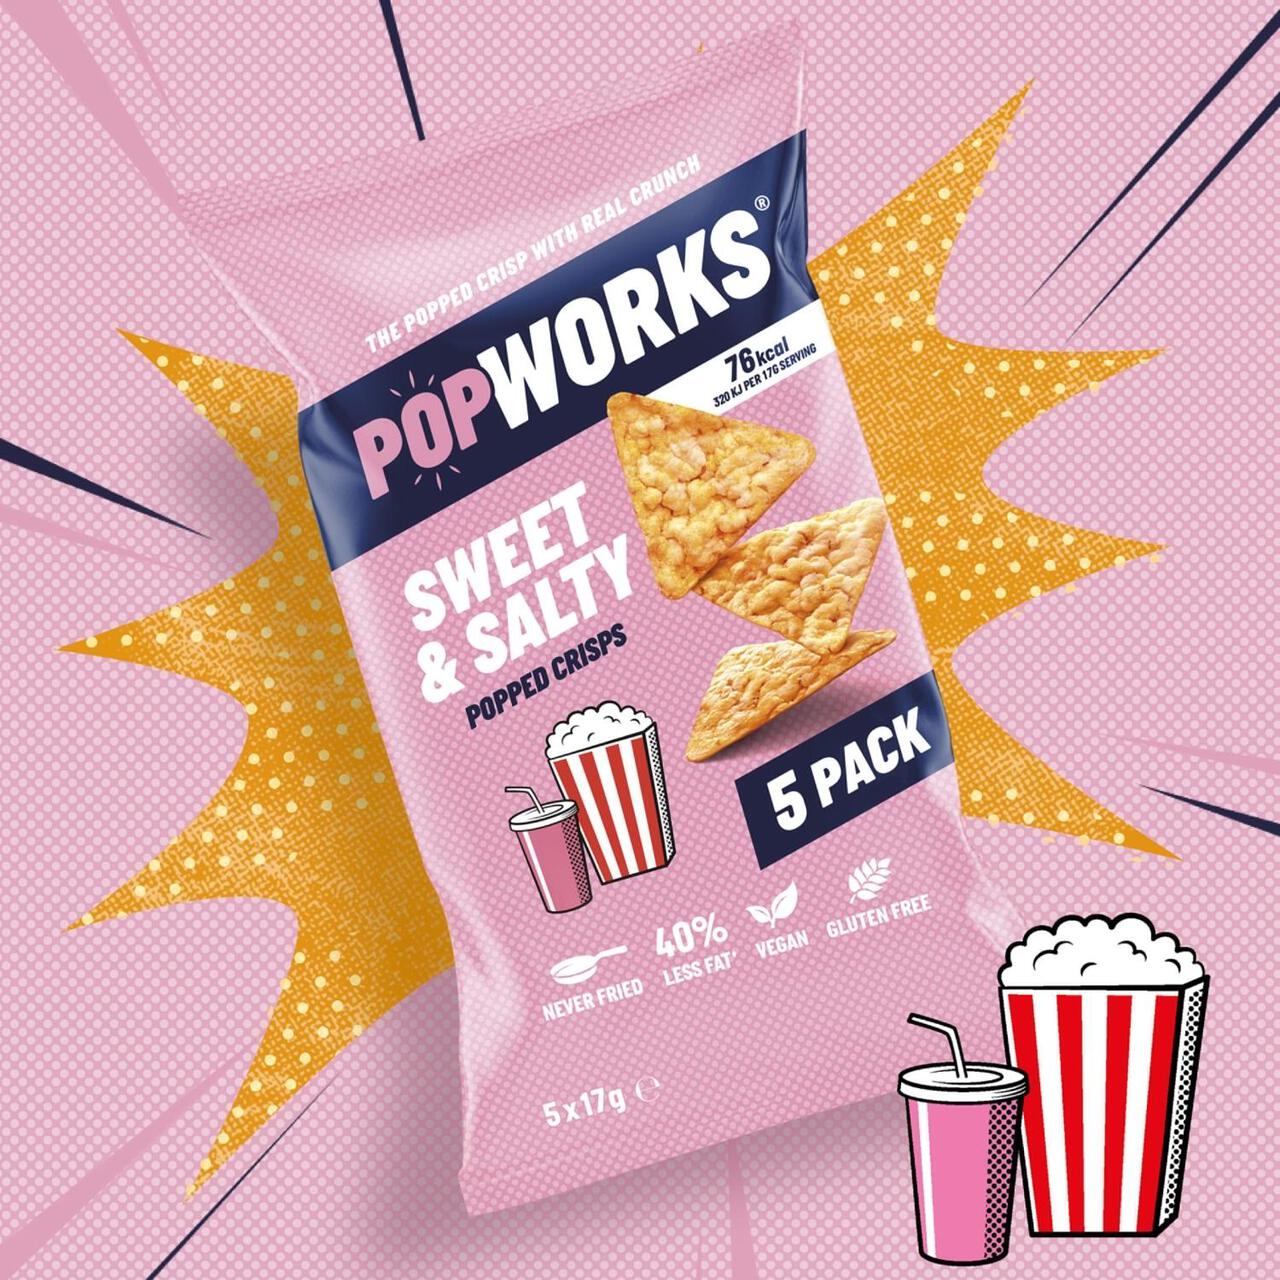 Popworks Sweet & Salty Multipack Popped Crisps 5 per pack